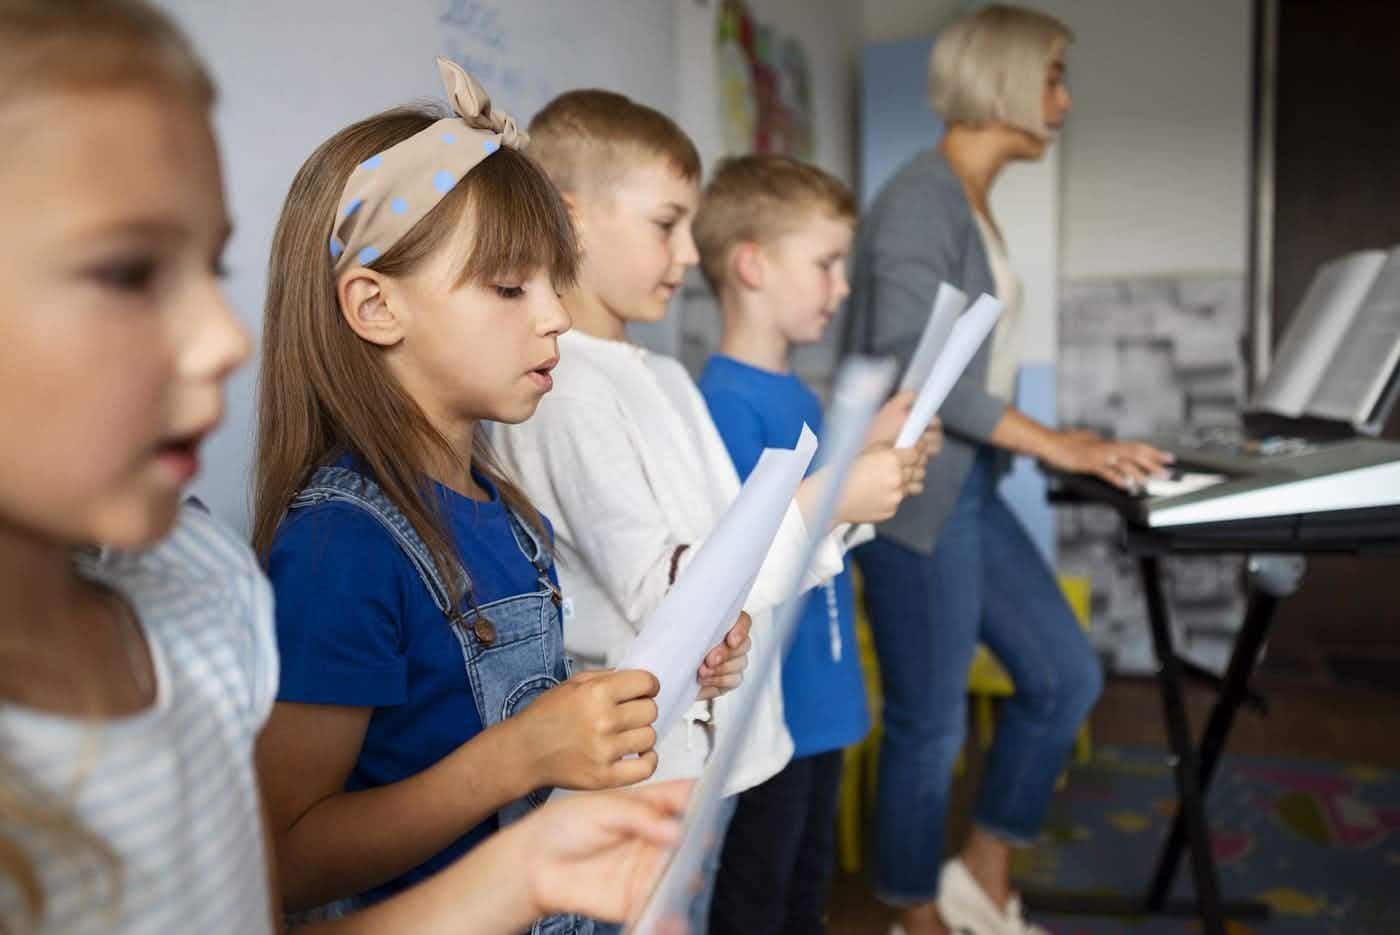 Children sing in a choir while reading their score